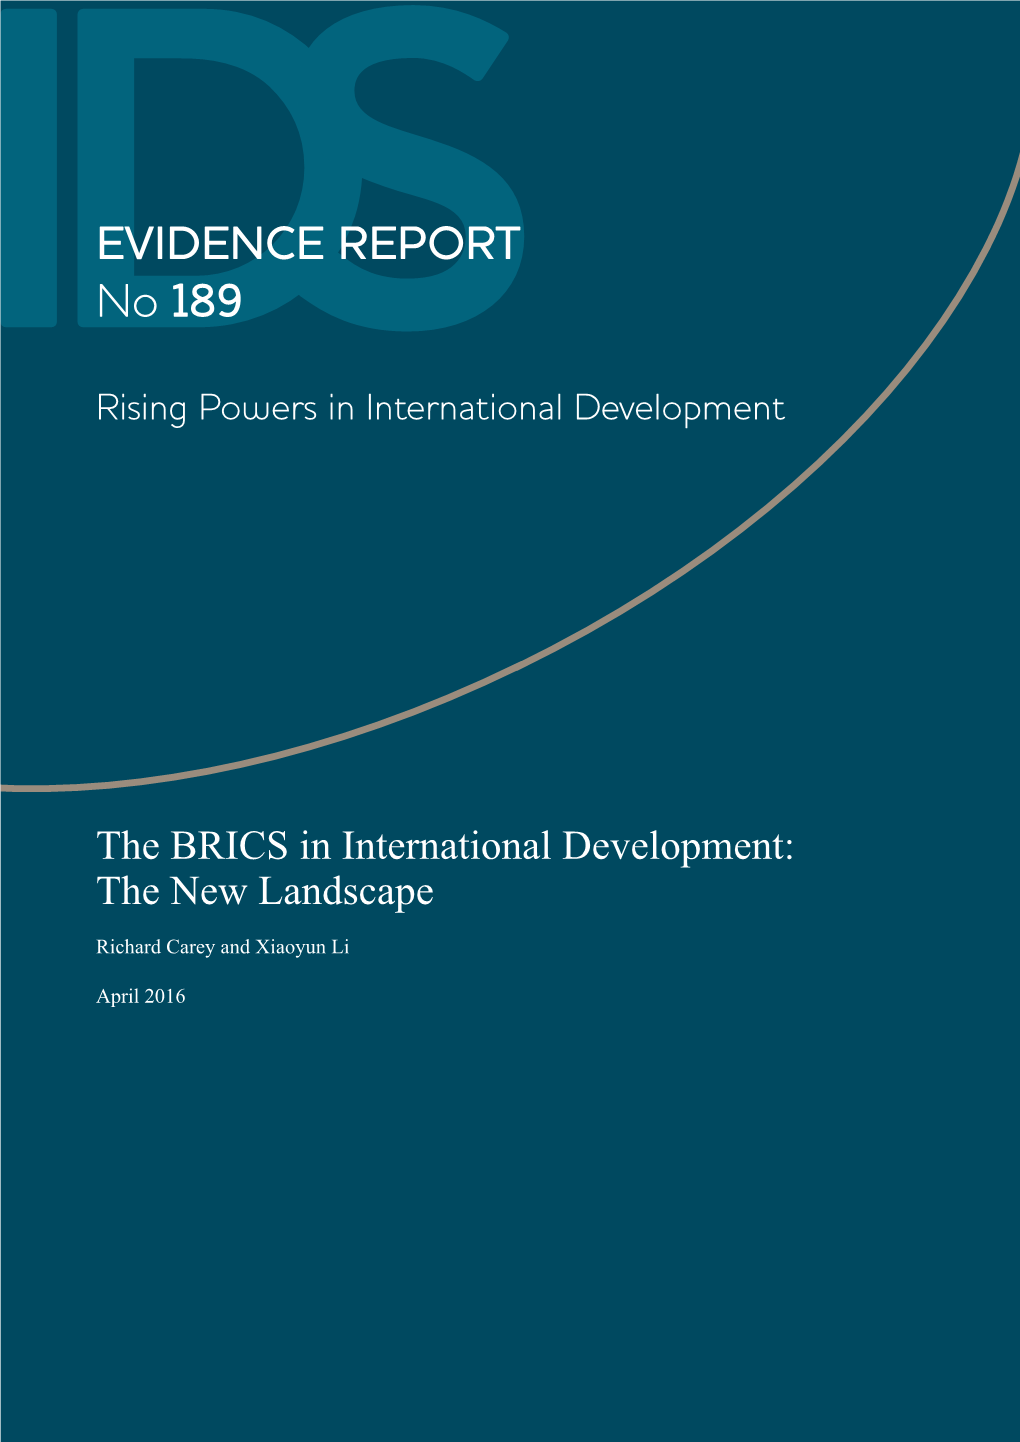 The BRICS in International Development: the New Landscape